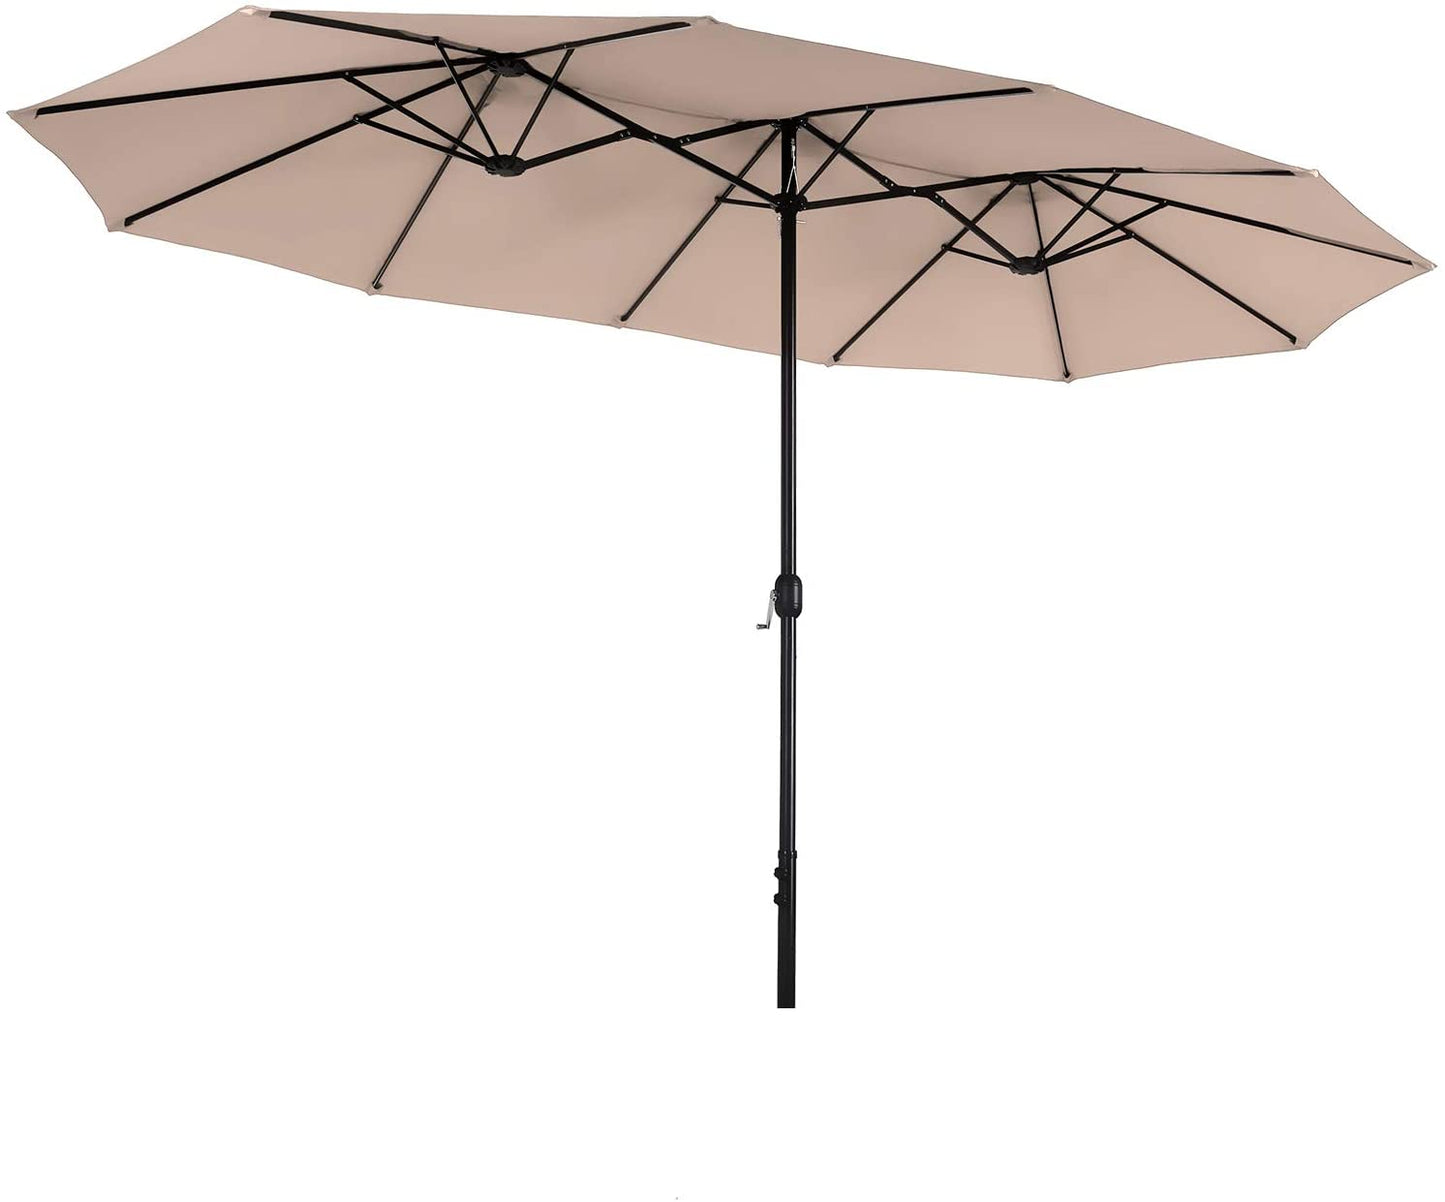 Sophia & William 13FT Outdoor Patio Umbrella Extra Large Double Sided Garden Umbrella with Crank Handle, Beige